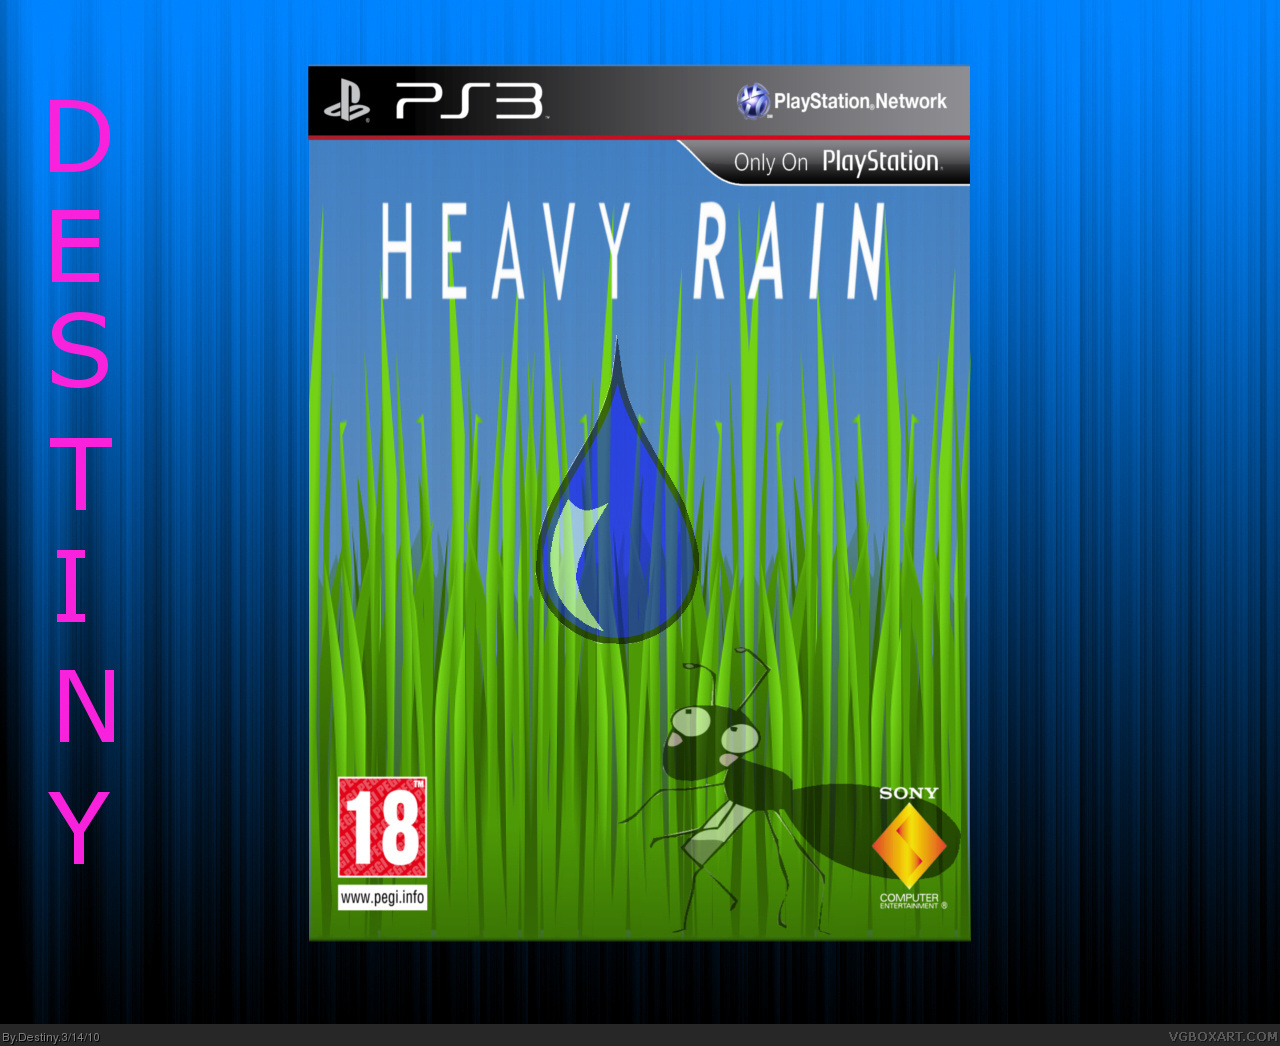 Heavy Rain box cover